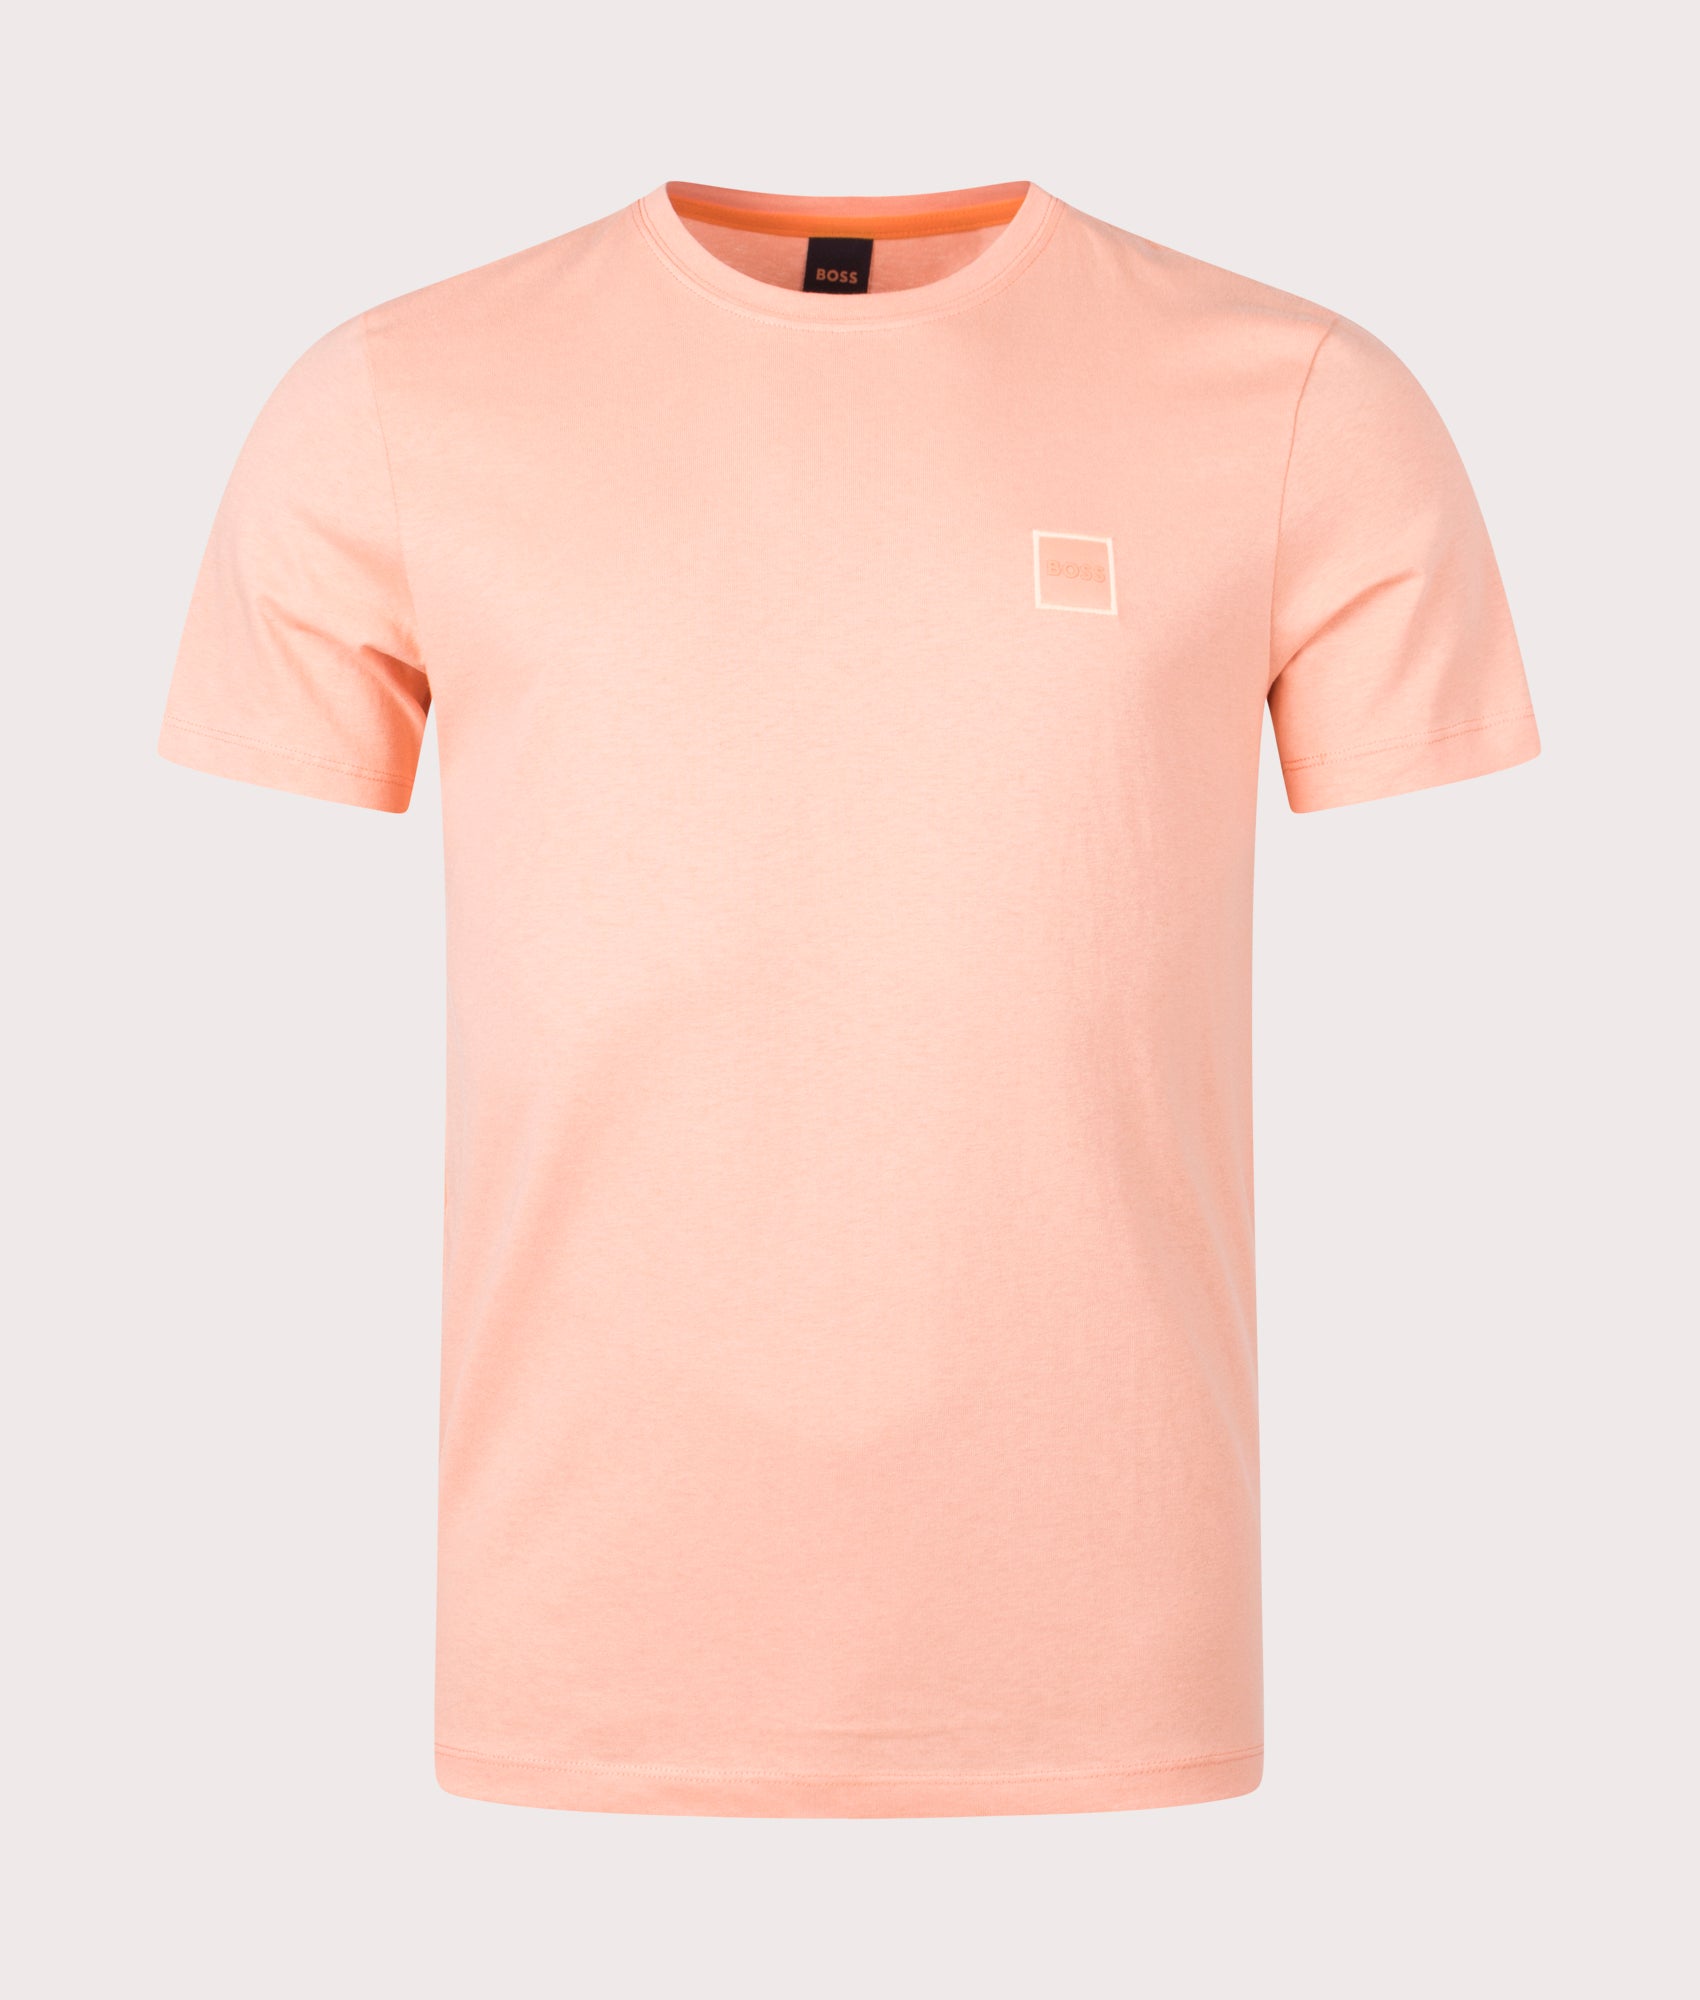 Tales T-Shirt Orange Fit | BOSS Light/Pastel EQVVS | Relaxed